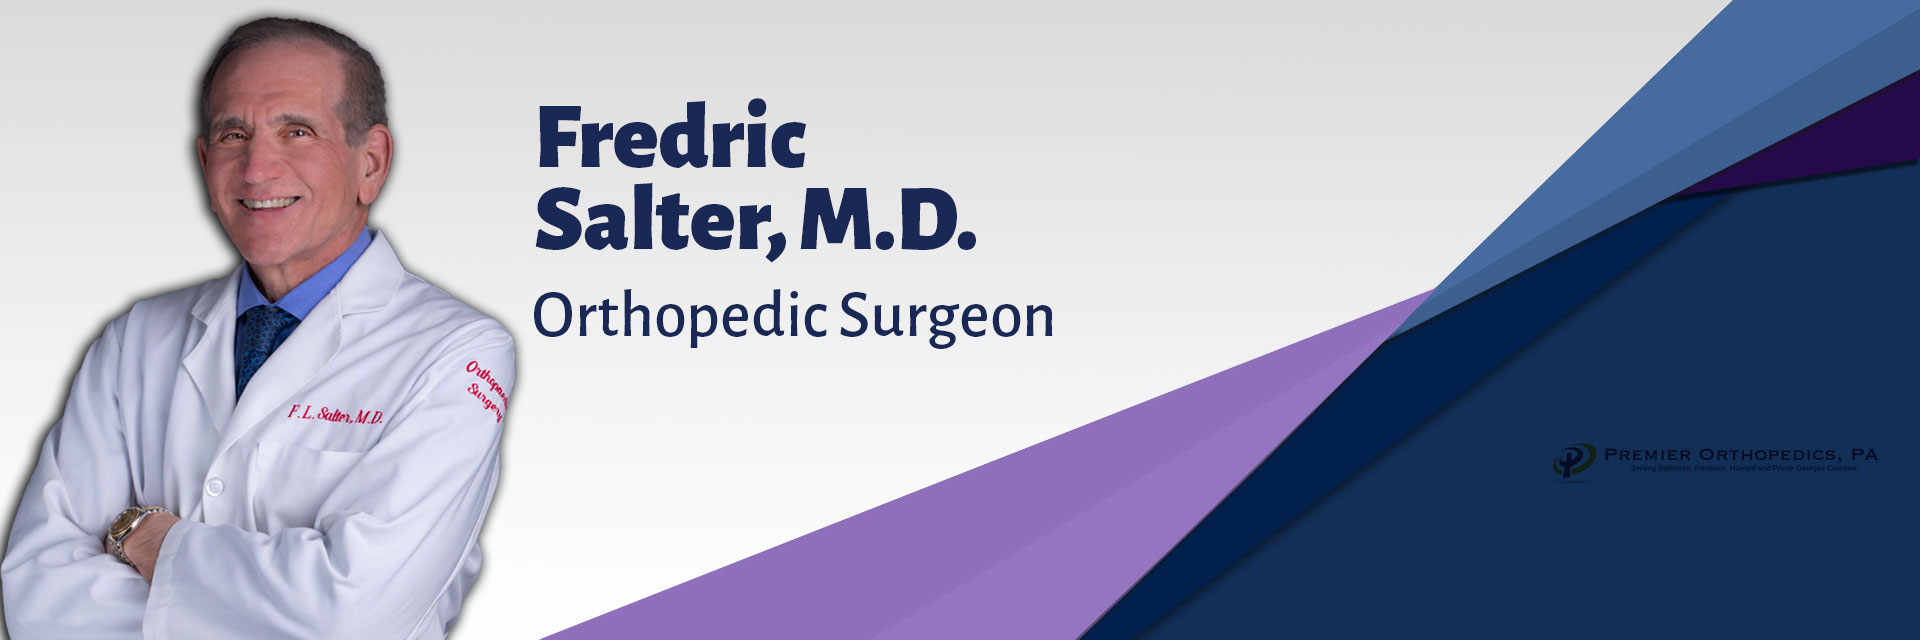 Fredric Salter Orthopedic surgeon